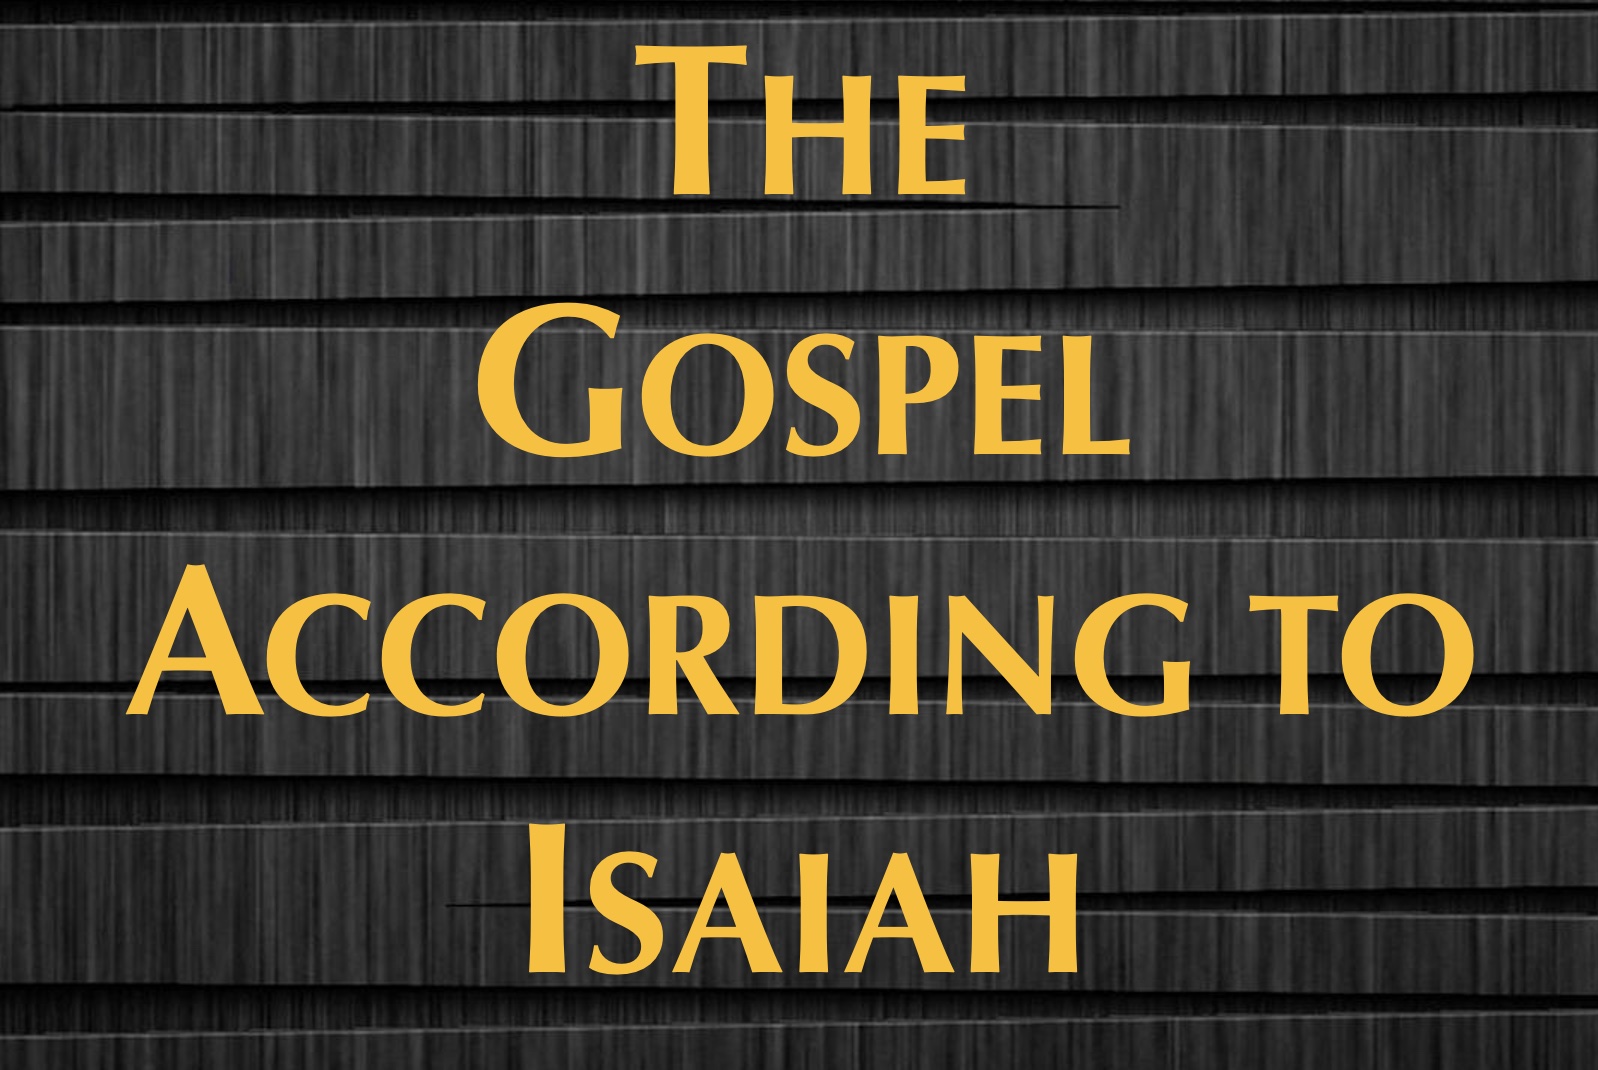 Gospel According to Isaiah 53:4-6